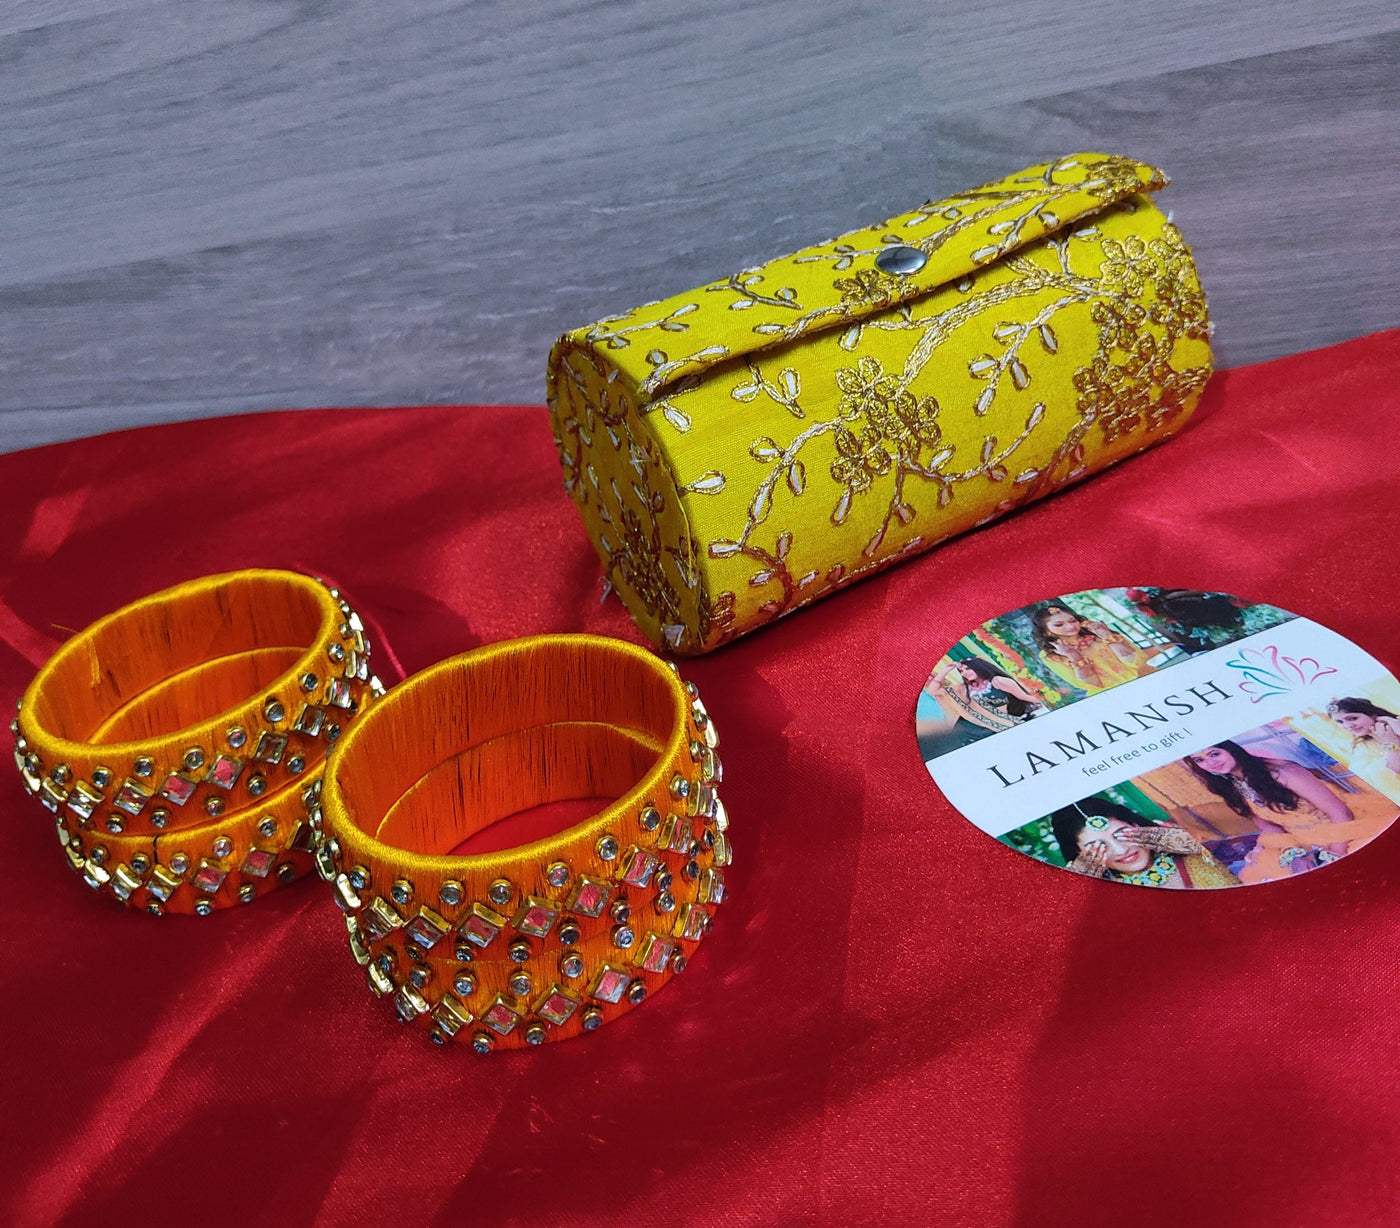 Lamansh kundan thread bangles LAMANSH® Pack of 5 pairs Kundan Indian Thread Bangles in Assorted colors / 1 inch Broad Kada Bangle For Festival Wear / Bangles for Indian wedding functions & giveaways